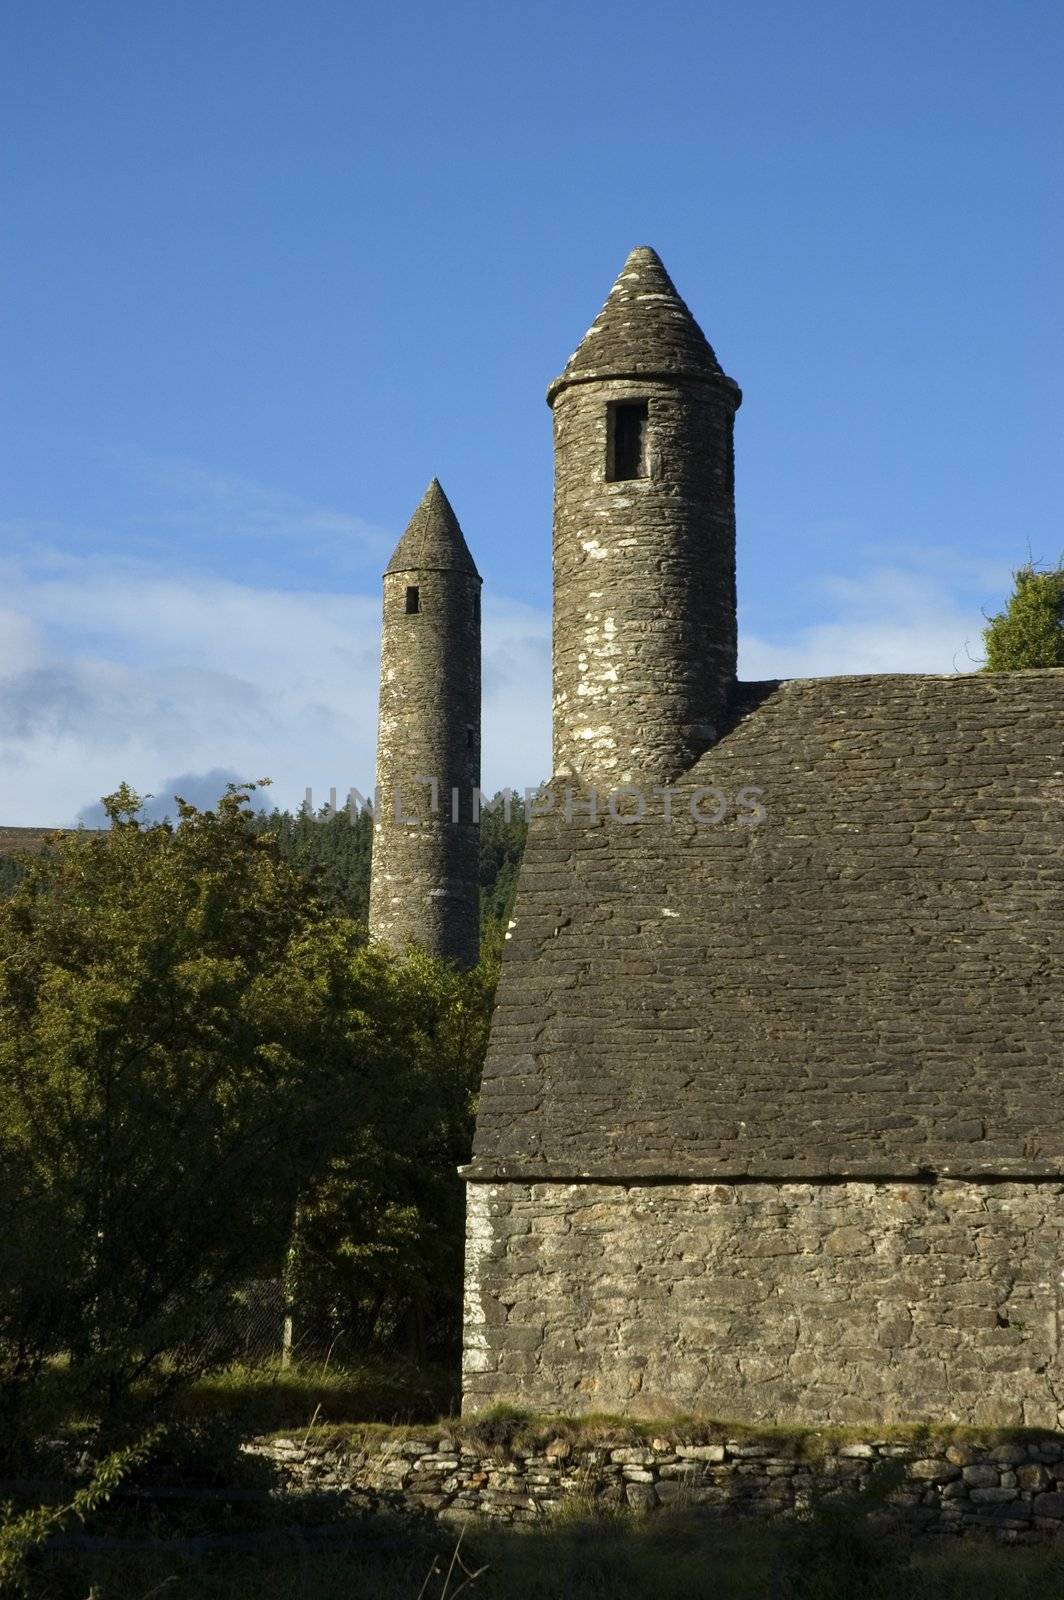 Medieval Round Tower in Wicklow Ireland